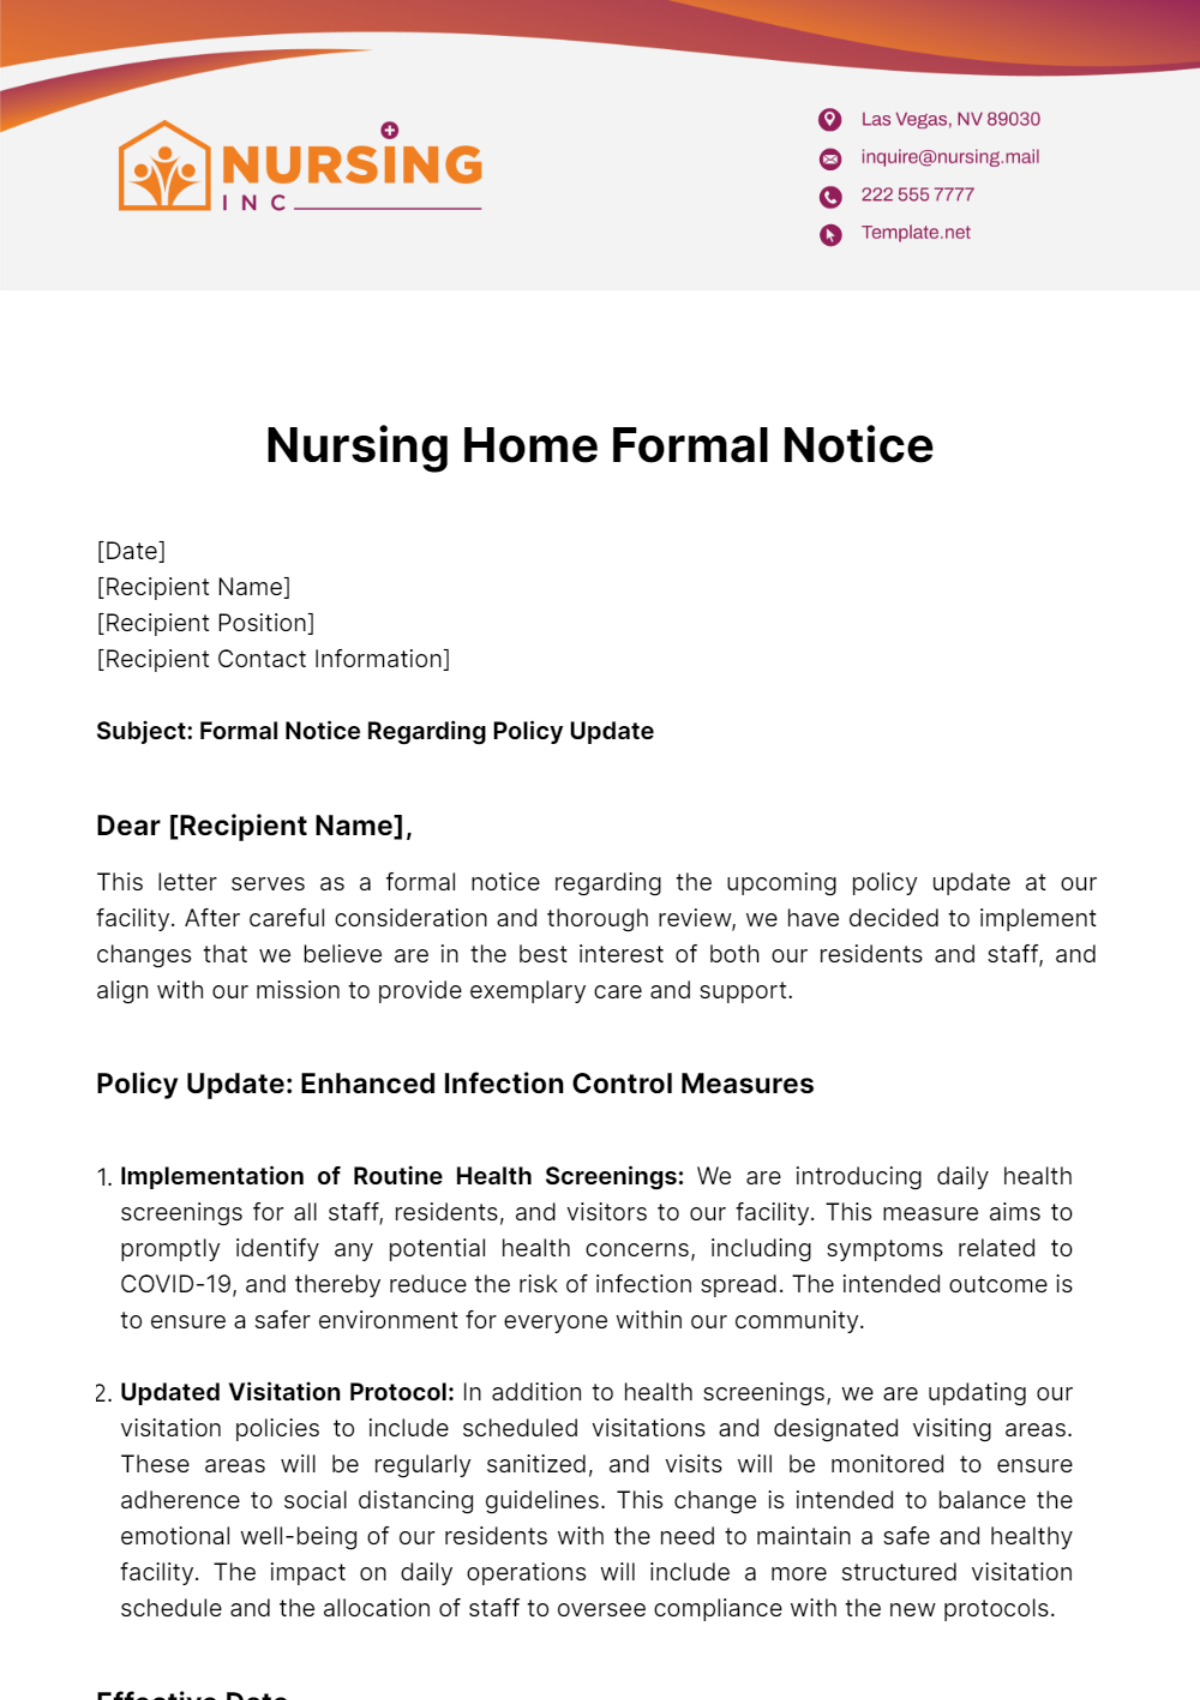 Nursing Home Formal Notice Template